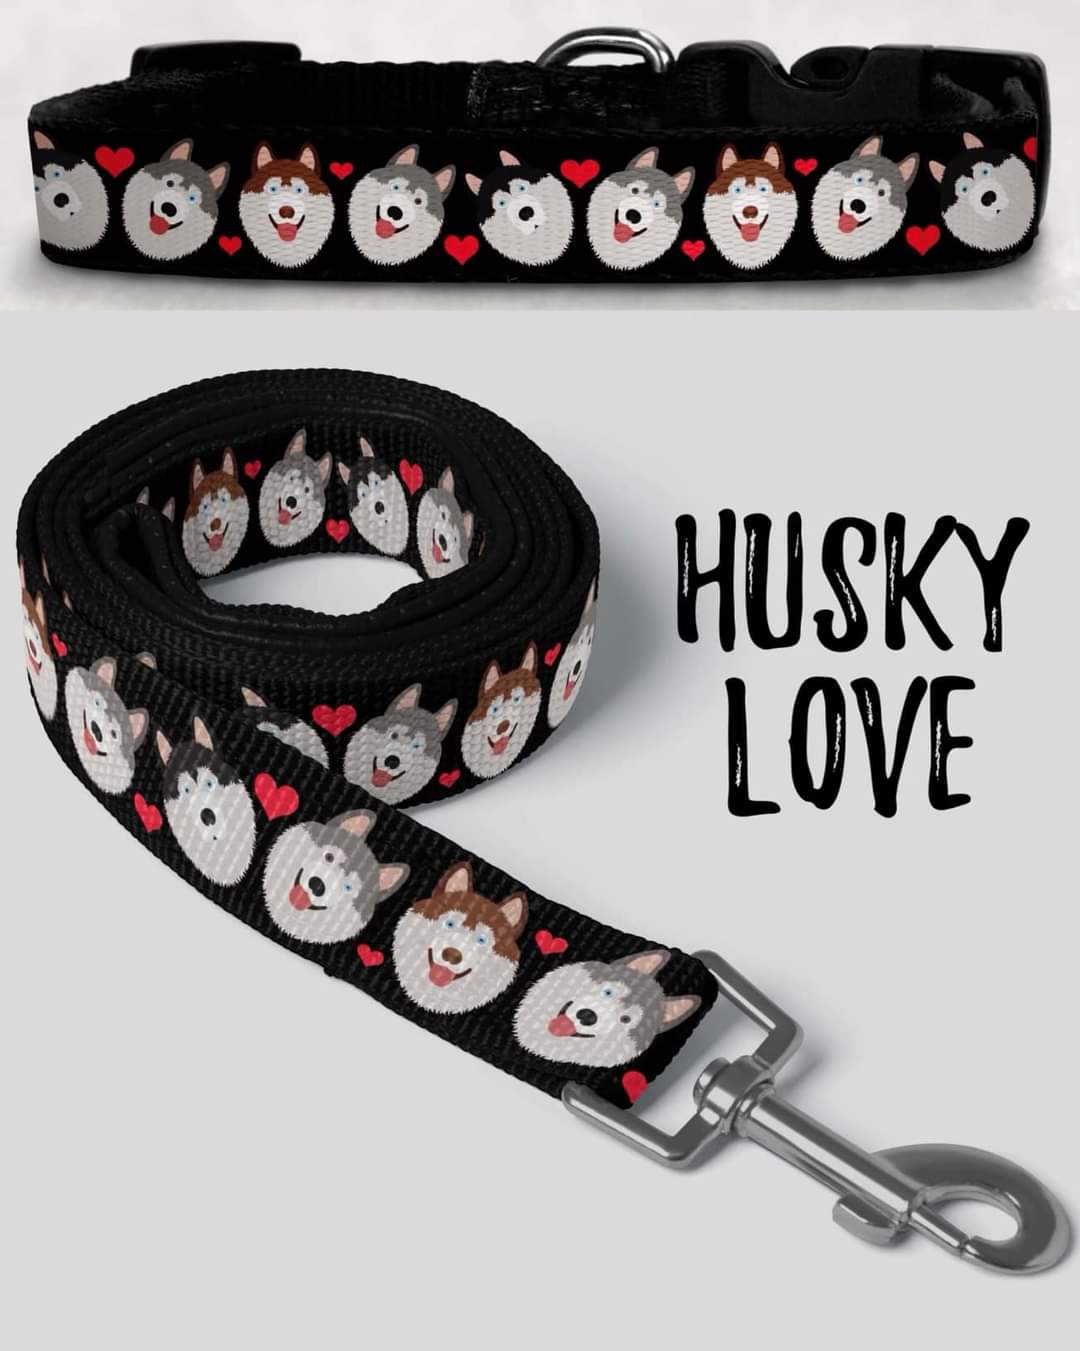 Husky love custom leash and collar set